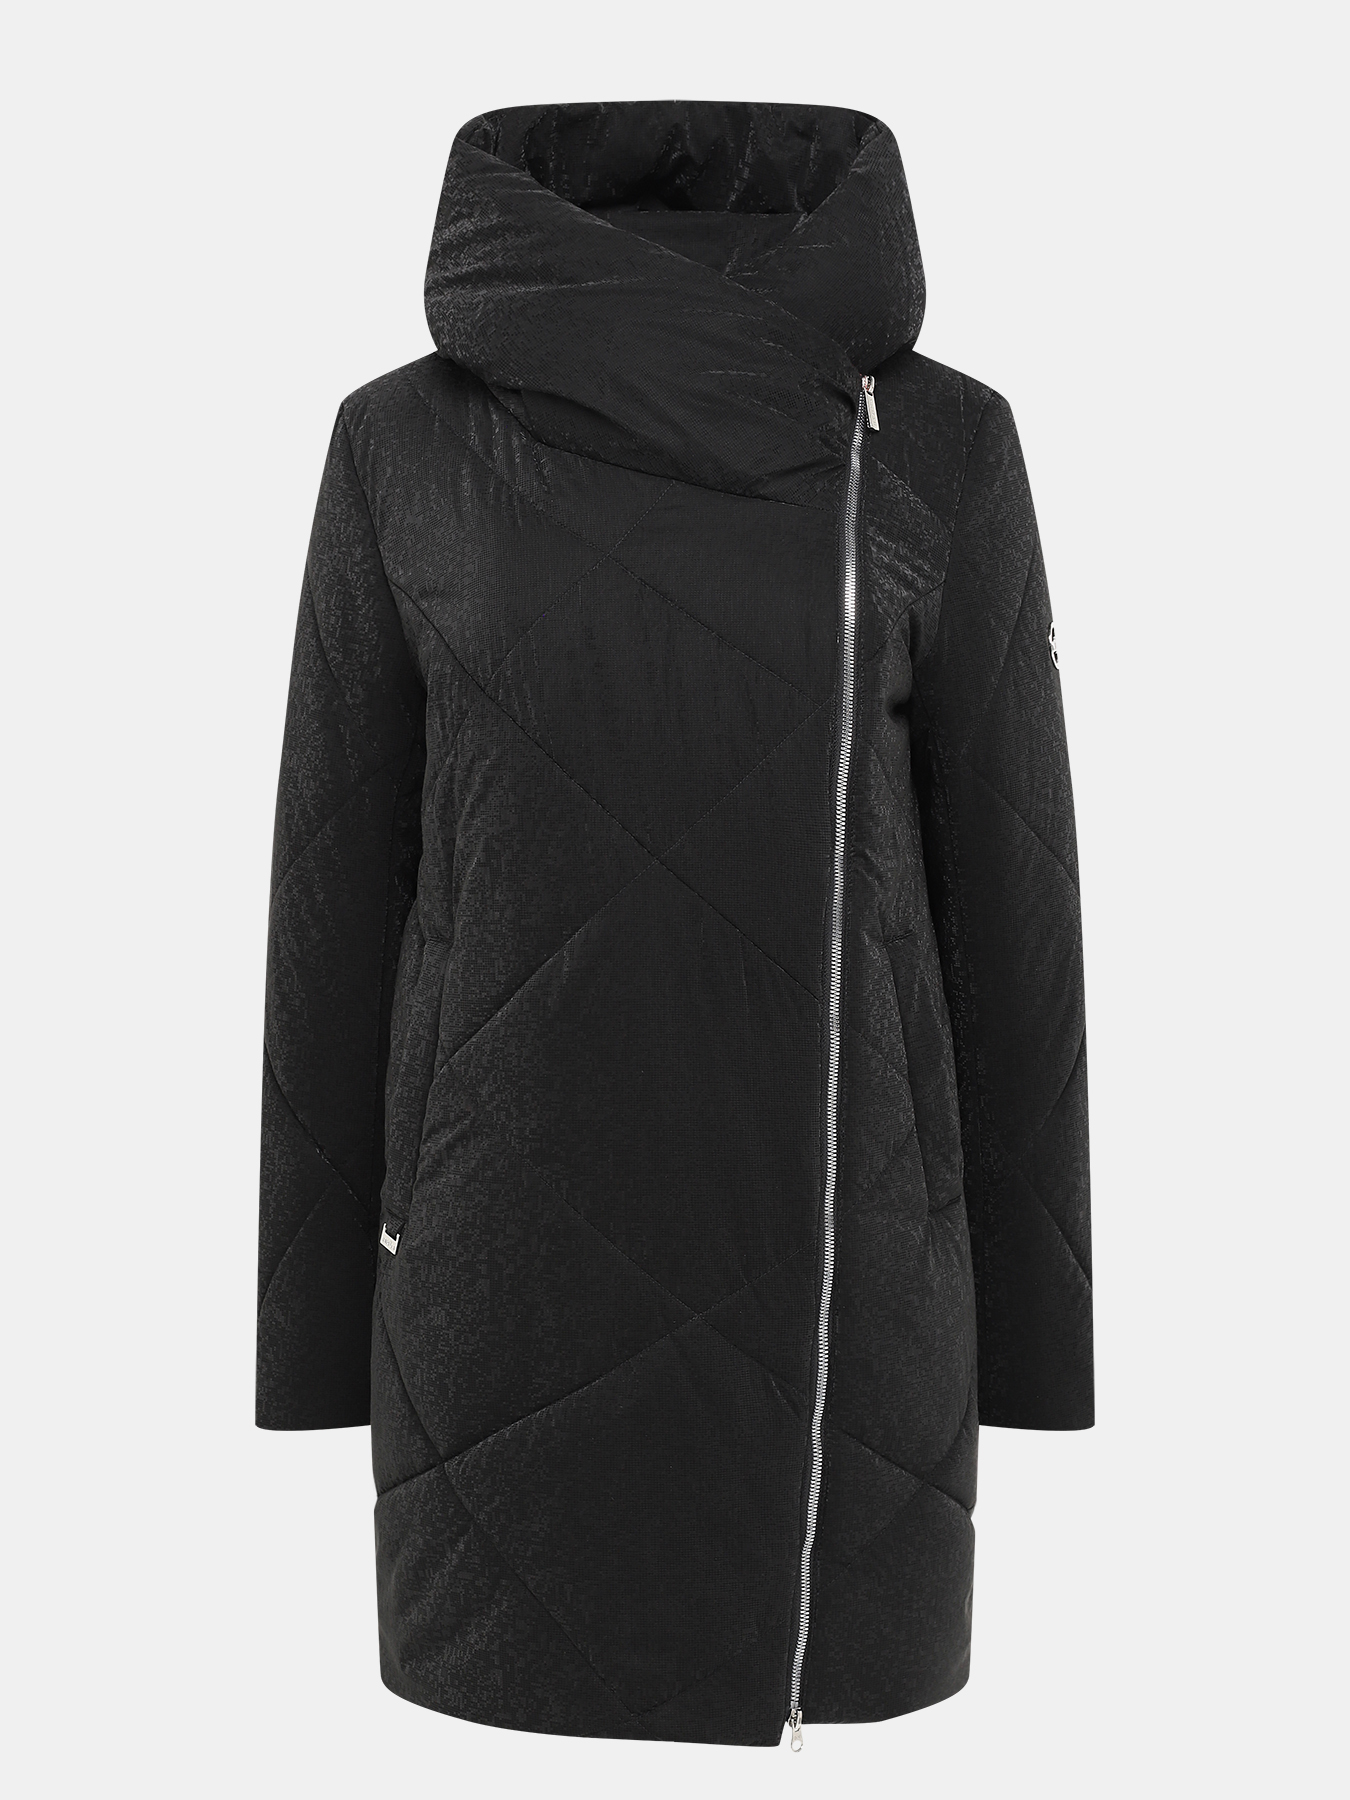 Пальто зимнее Maritta 433524-021, цвет черный, размер 46